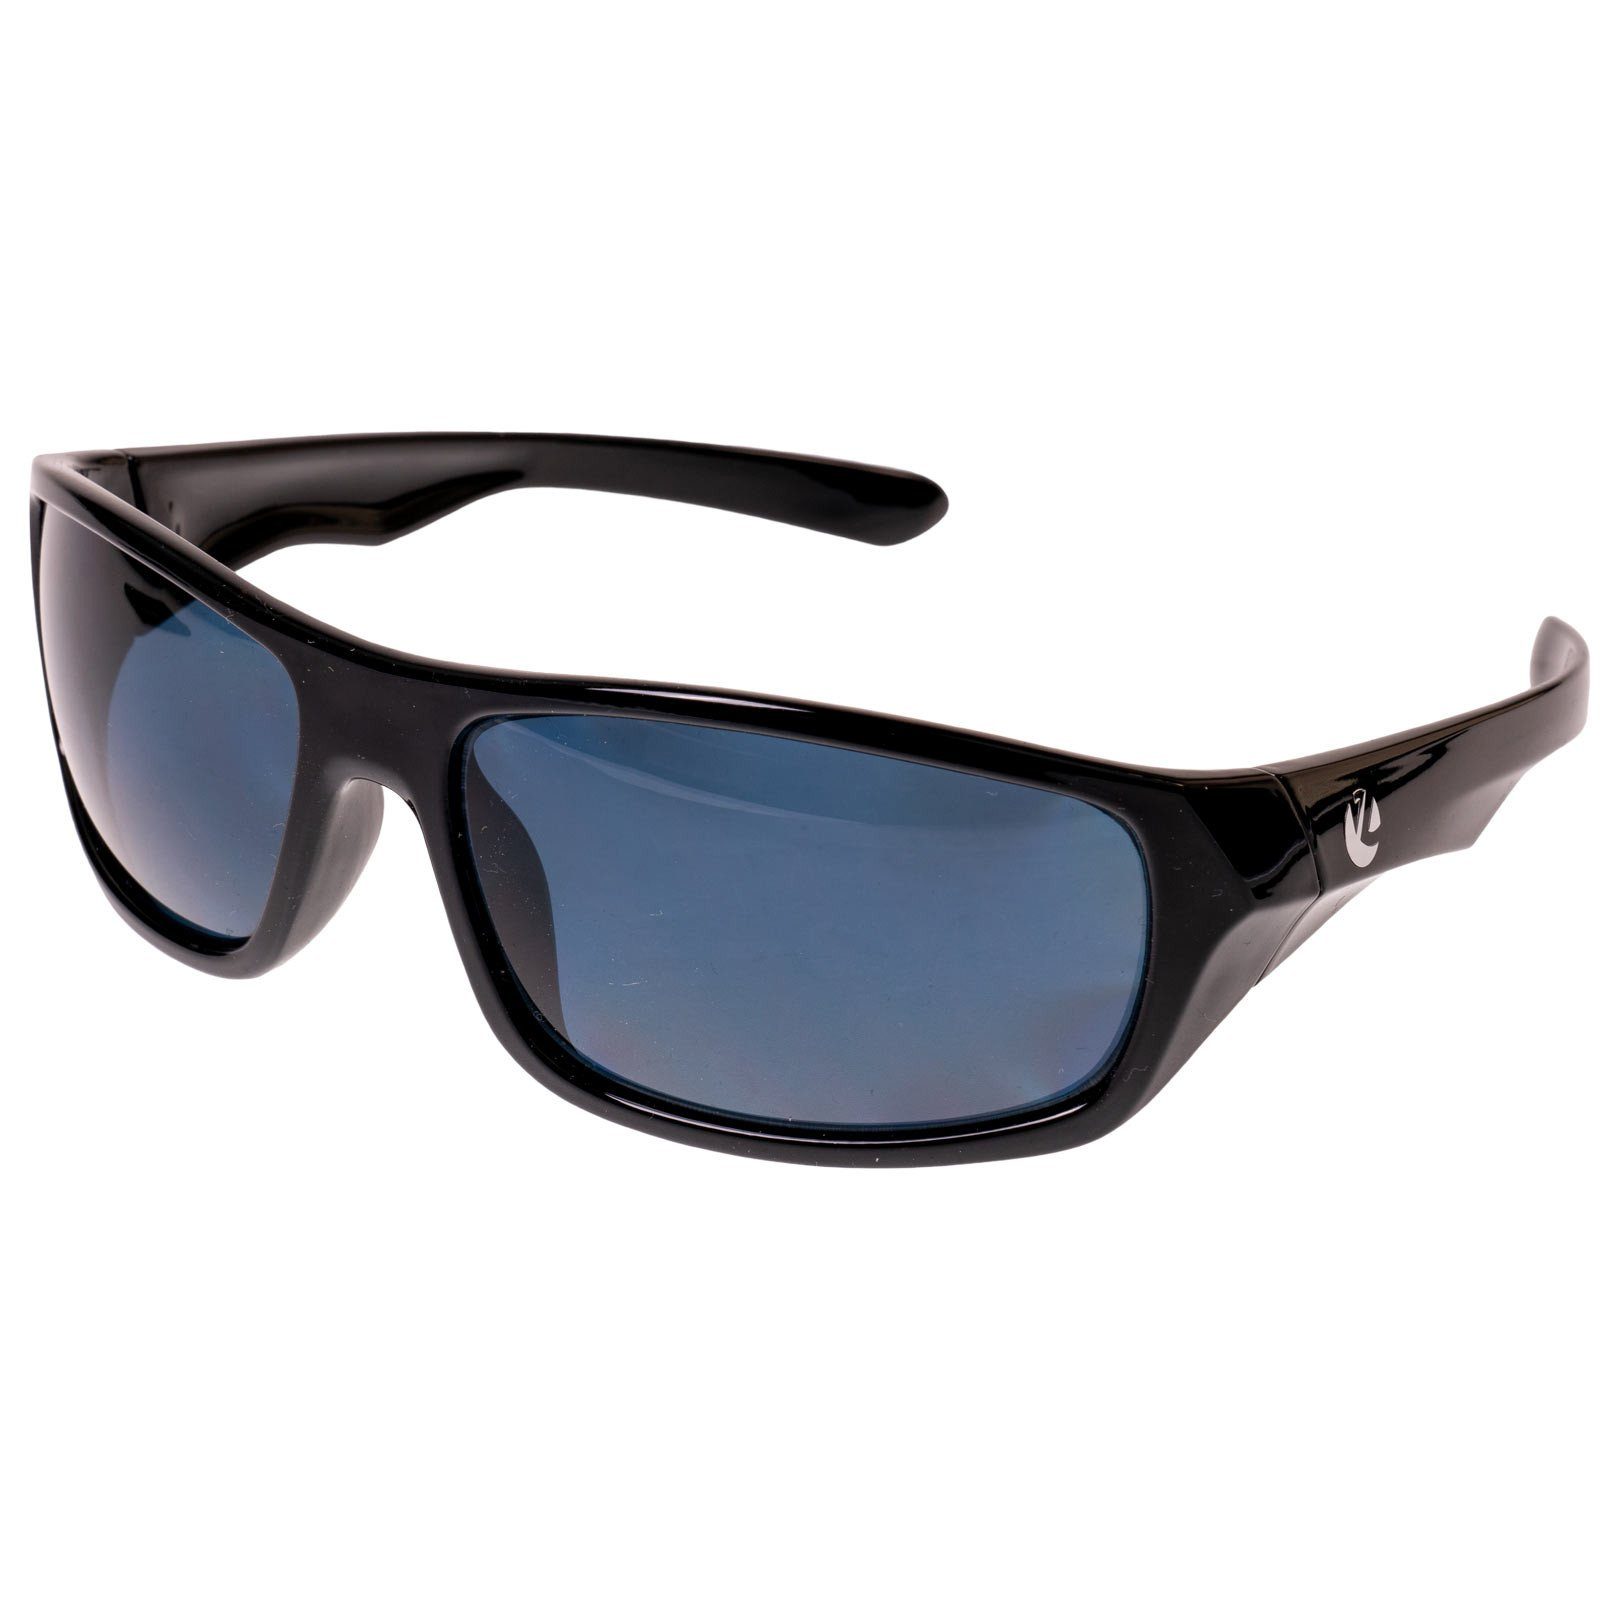 Neue Artikel zum Kauf Zeck Fishing Sonnenbrille Angelbrille Grey Anglerbrille Glasses Polbrille Zeck Polarized Lens Polarisationsbrille